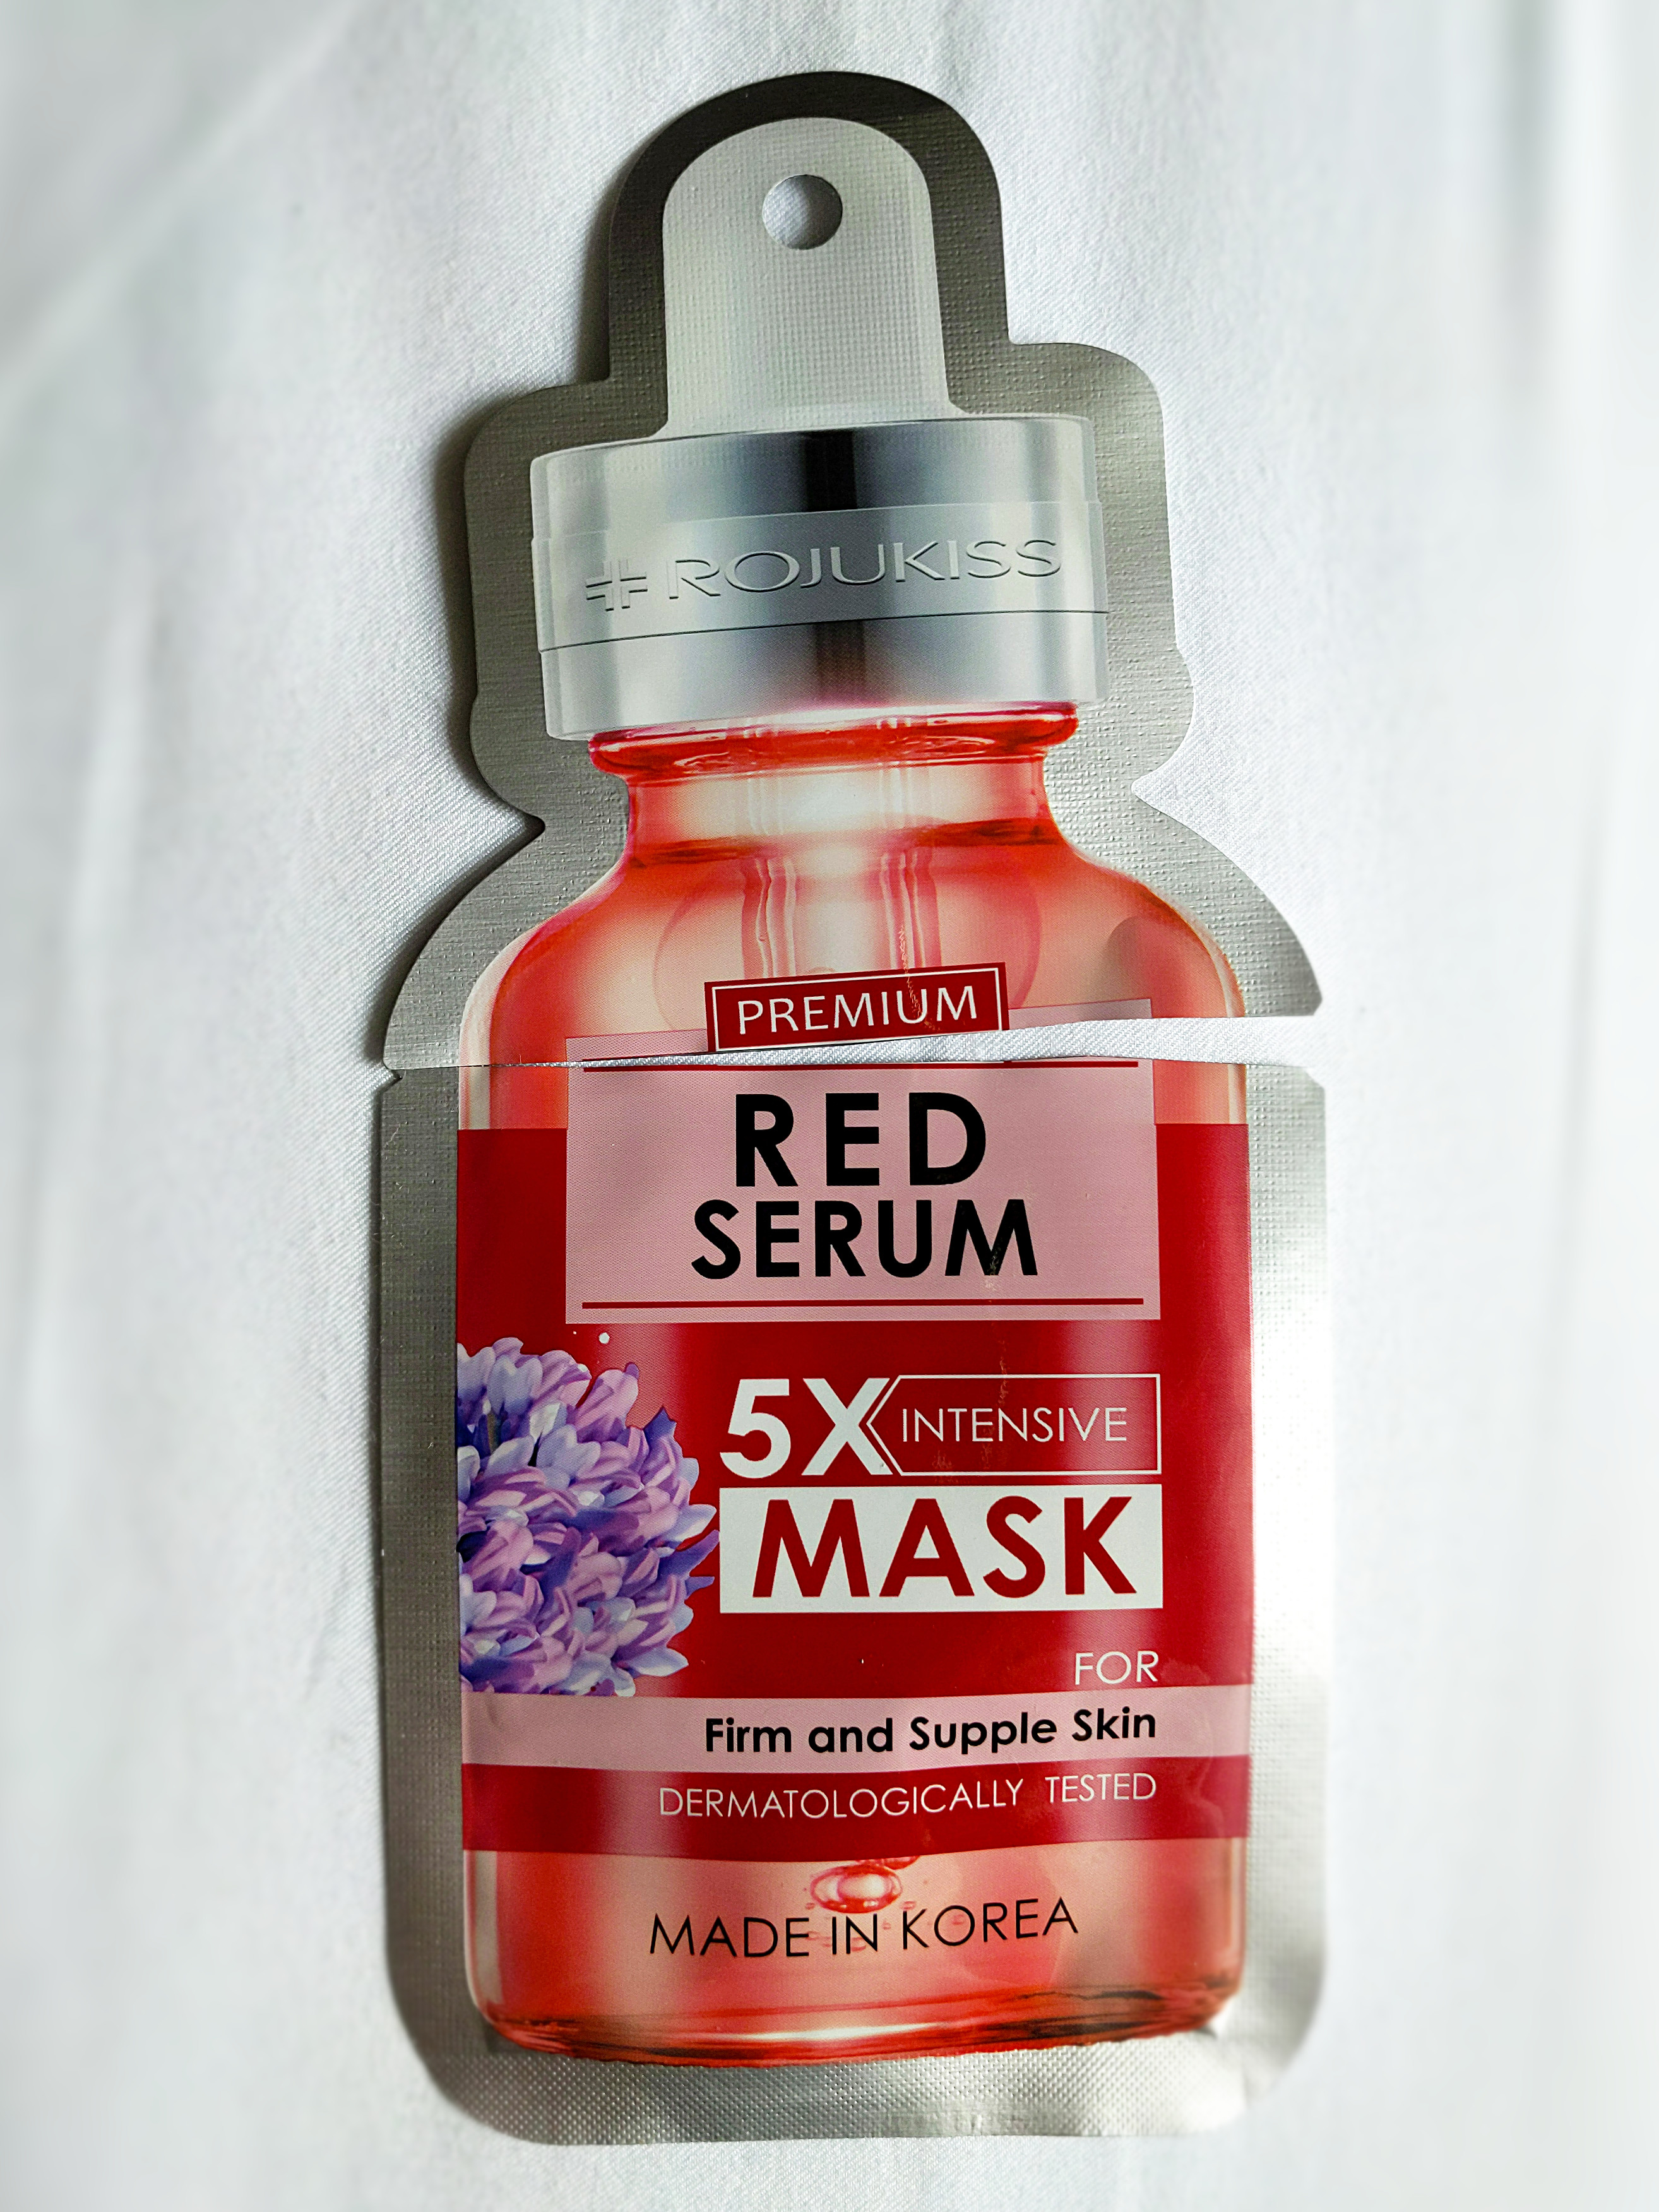 Rojukiss Red Serum 5x Intensive Mask packaging front.